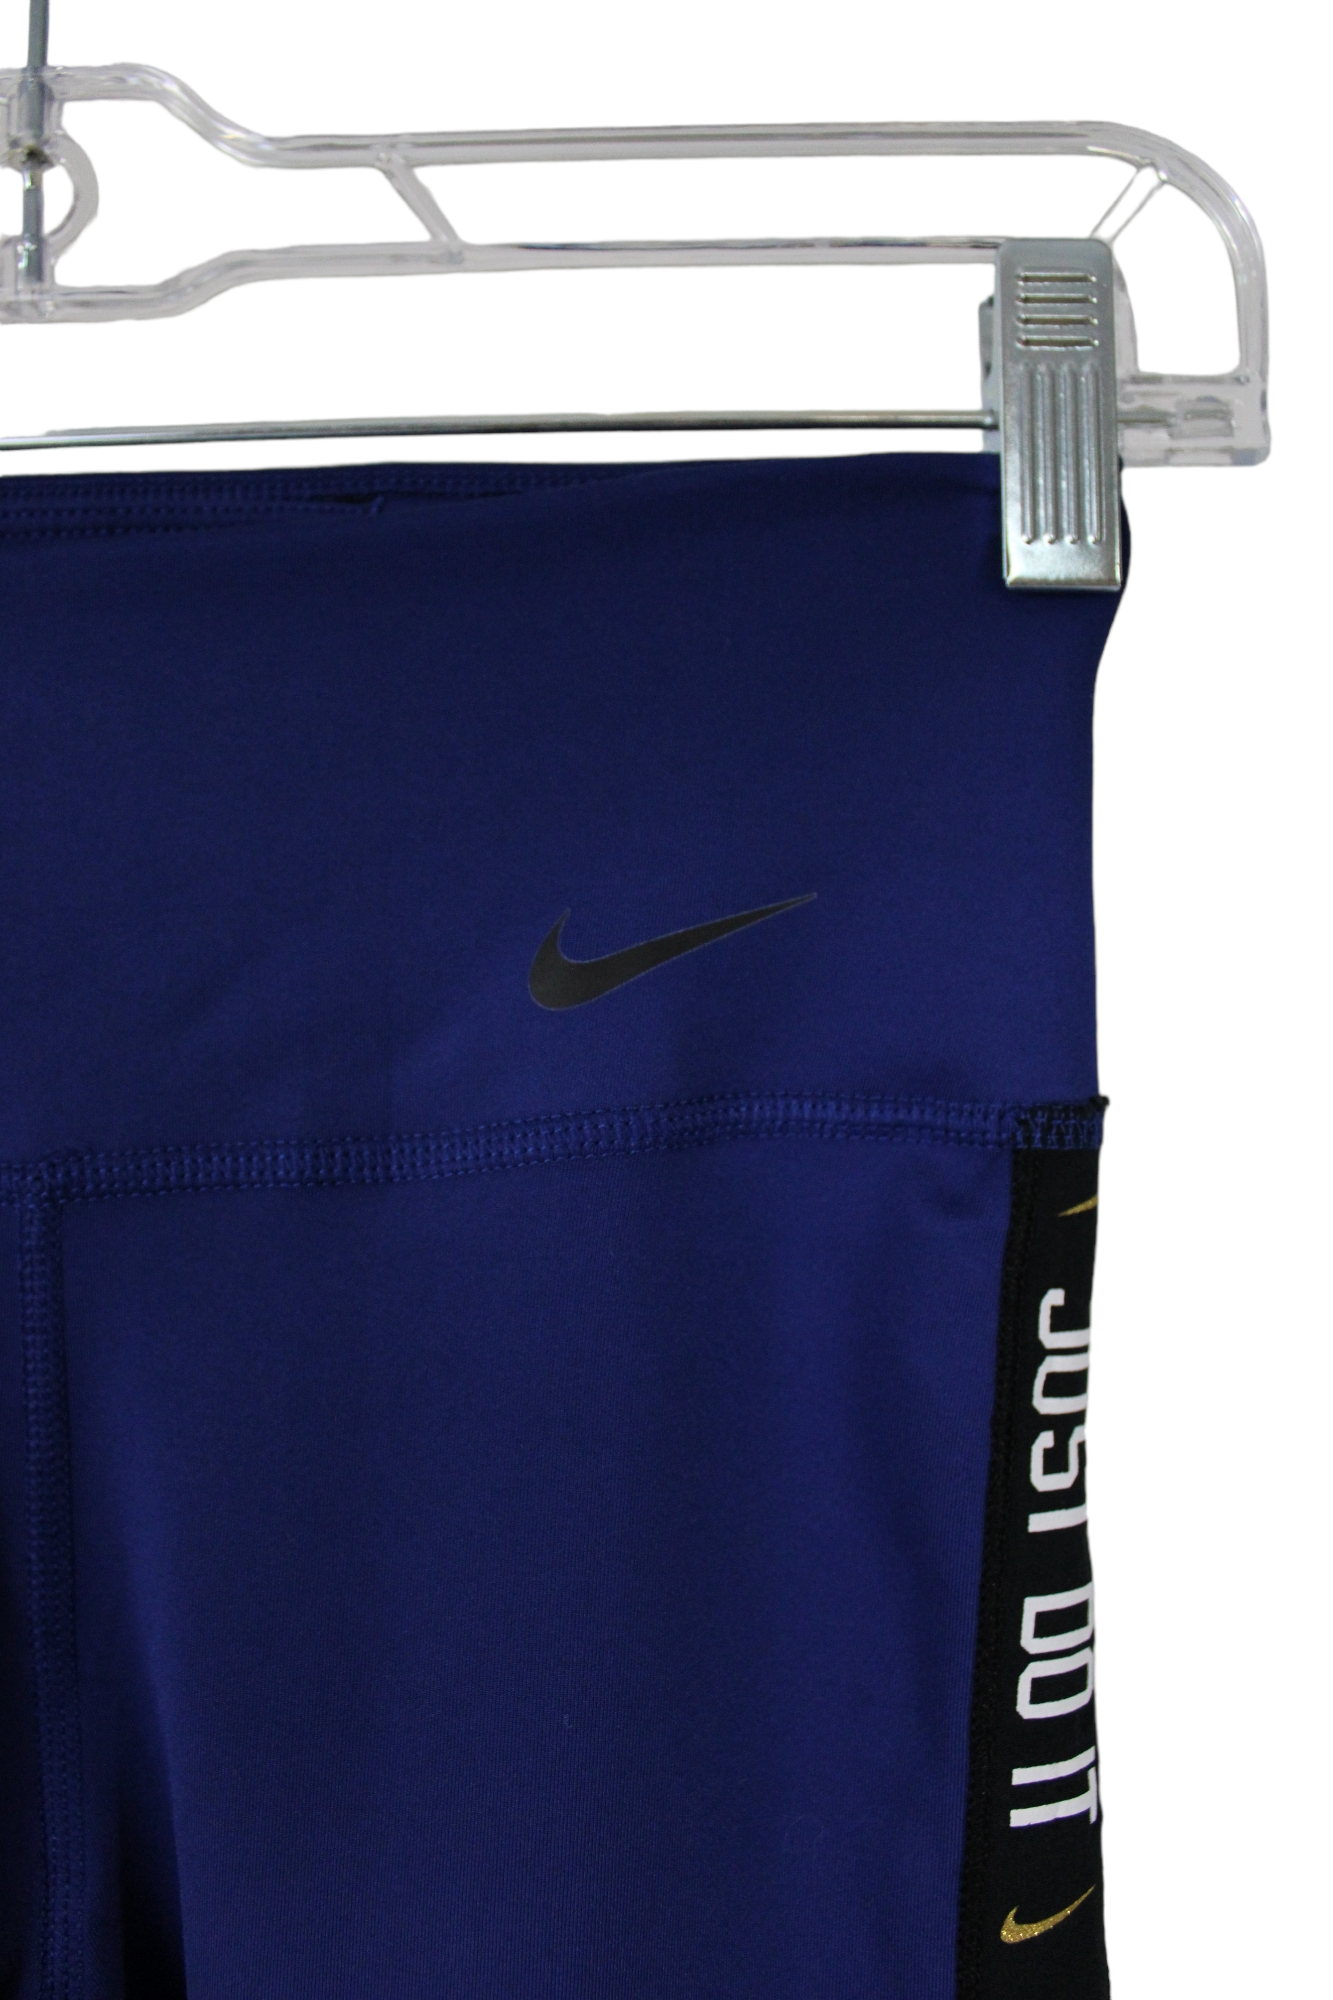 Nike Dri-Fit Cobalt Blue Ankle Leggings